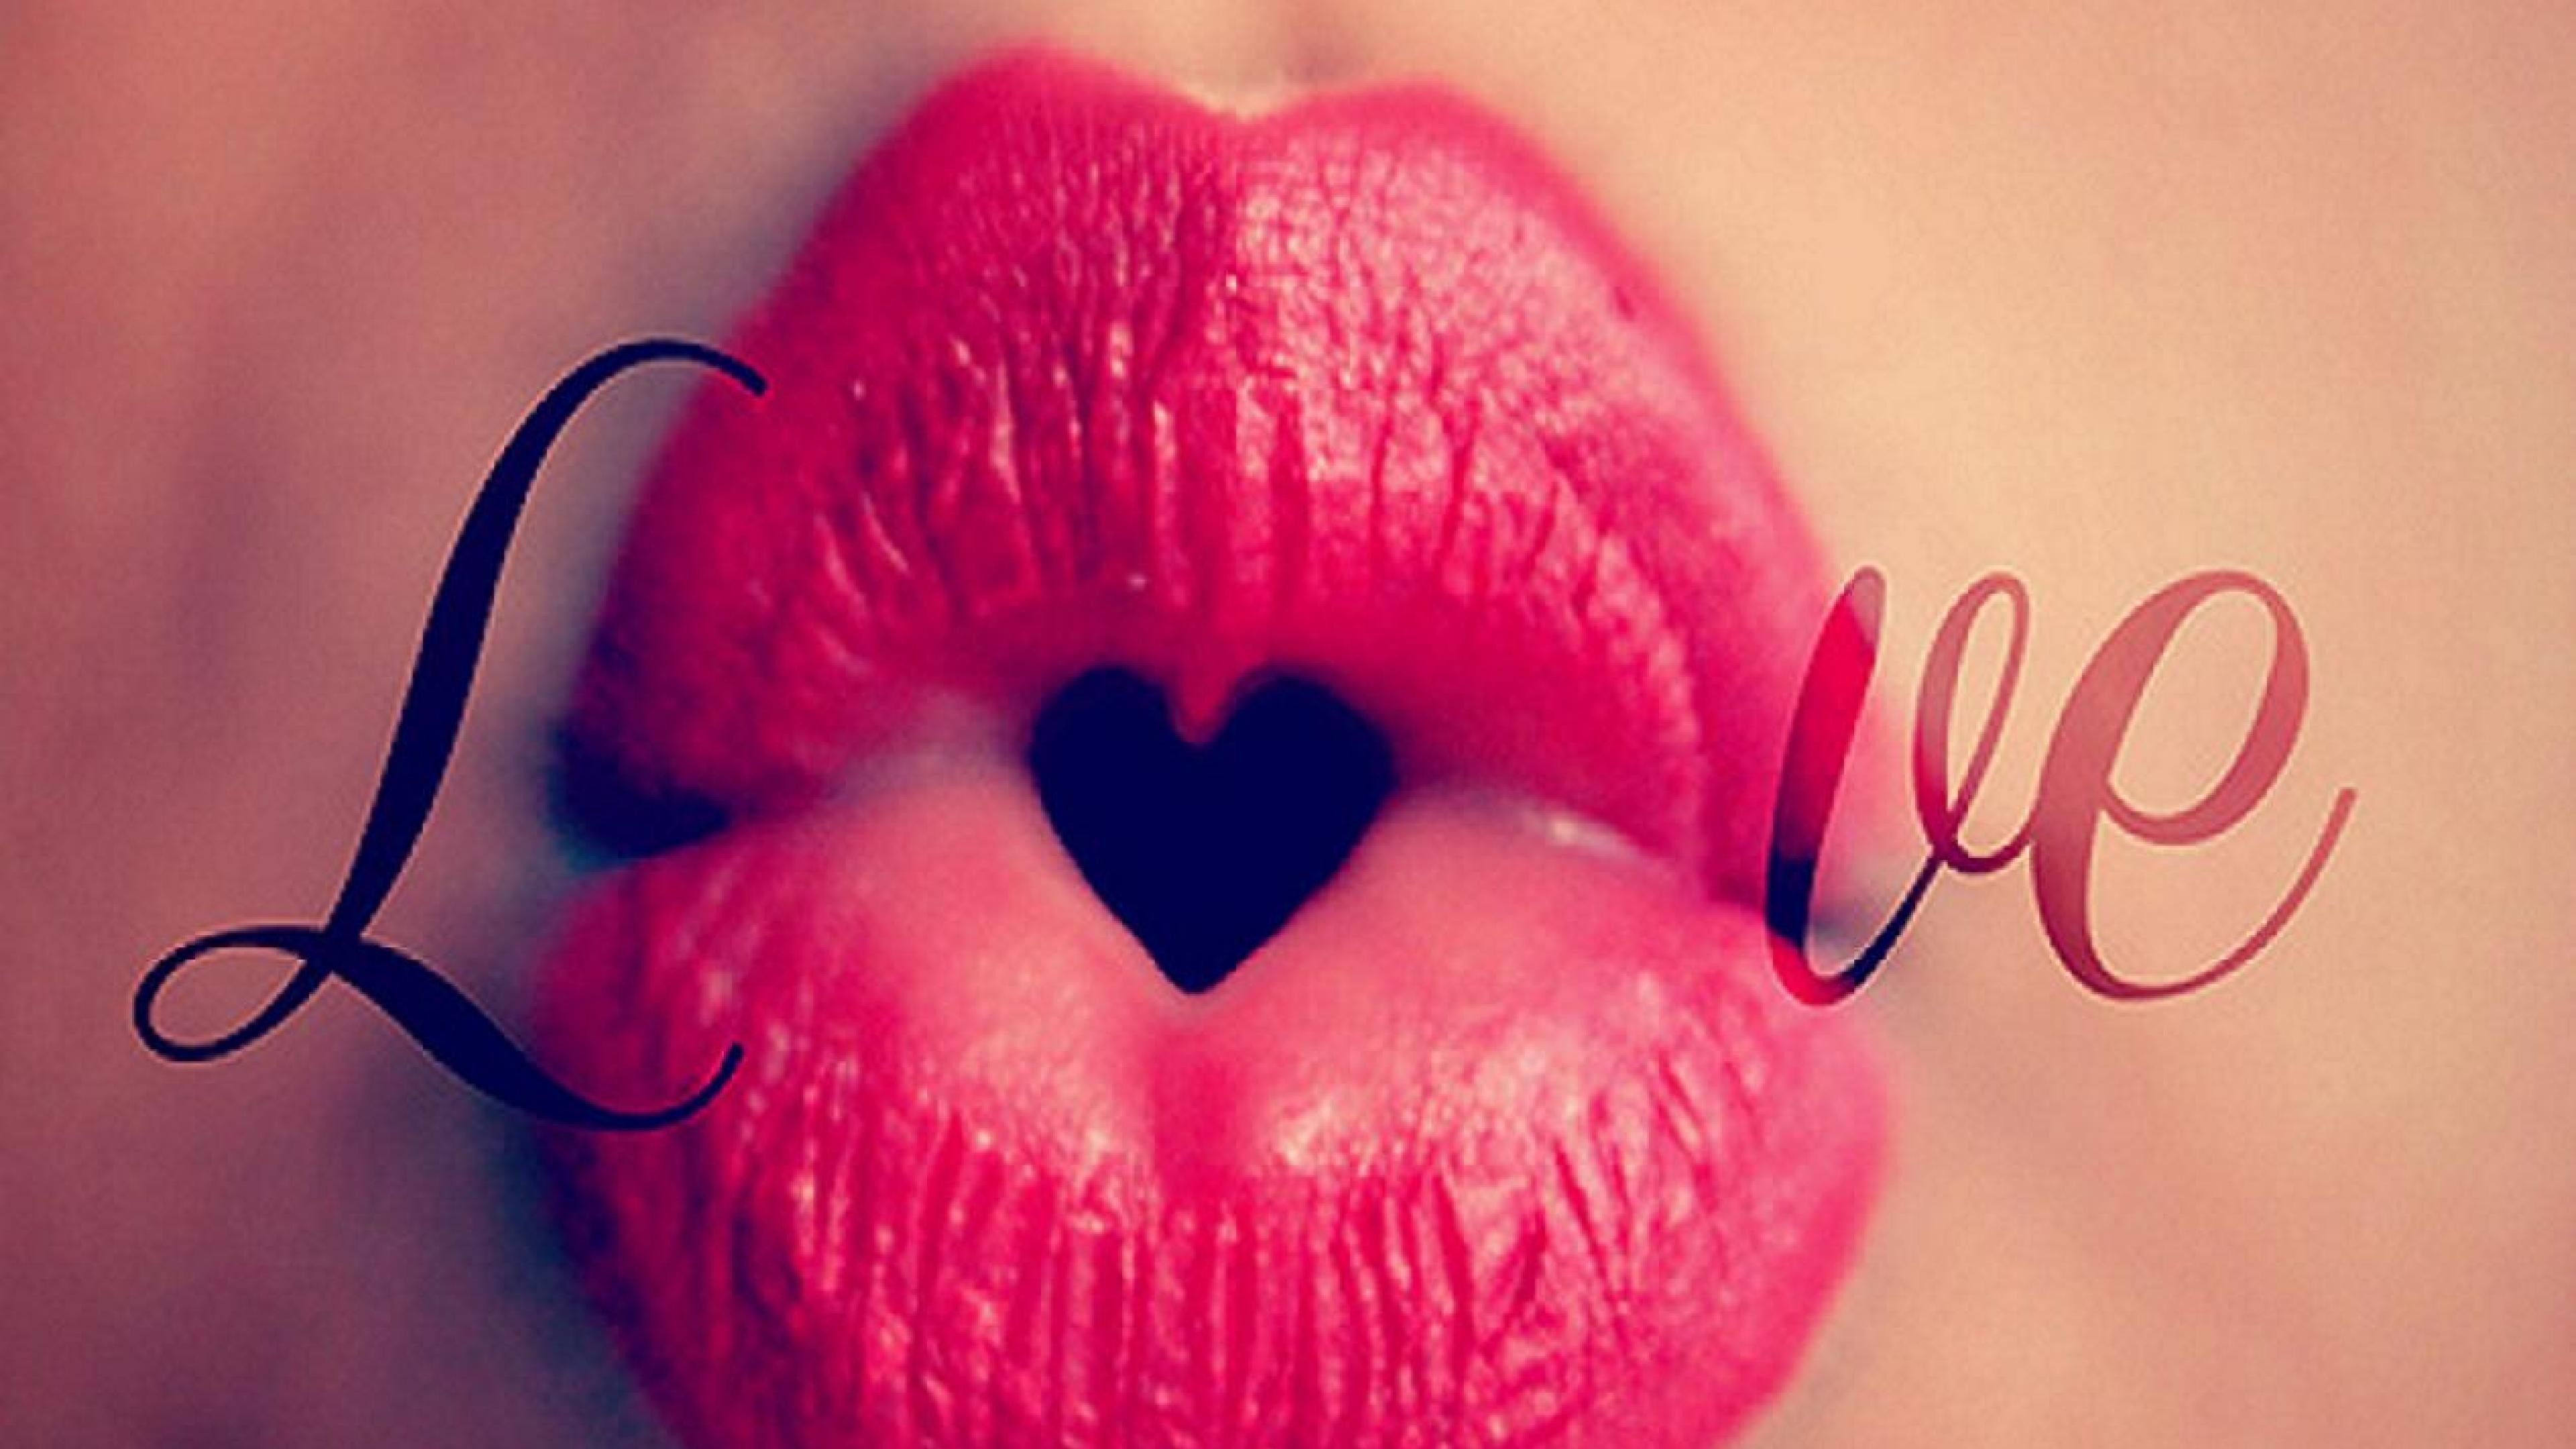 Wallpaper Kissing Lips